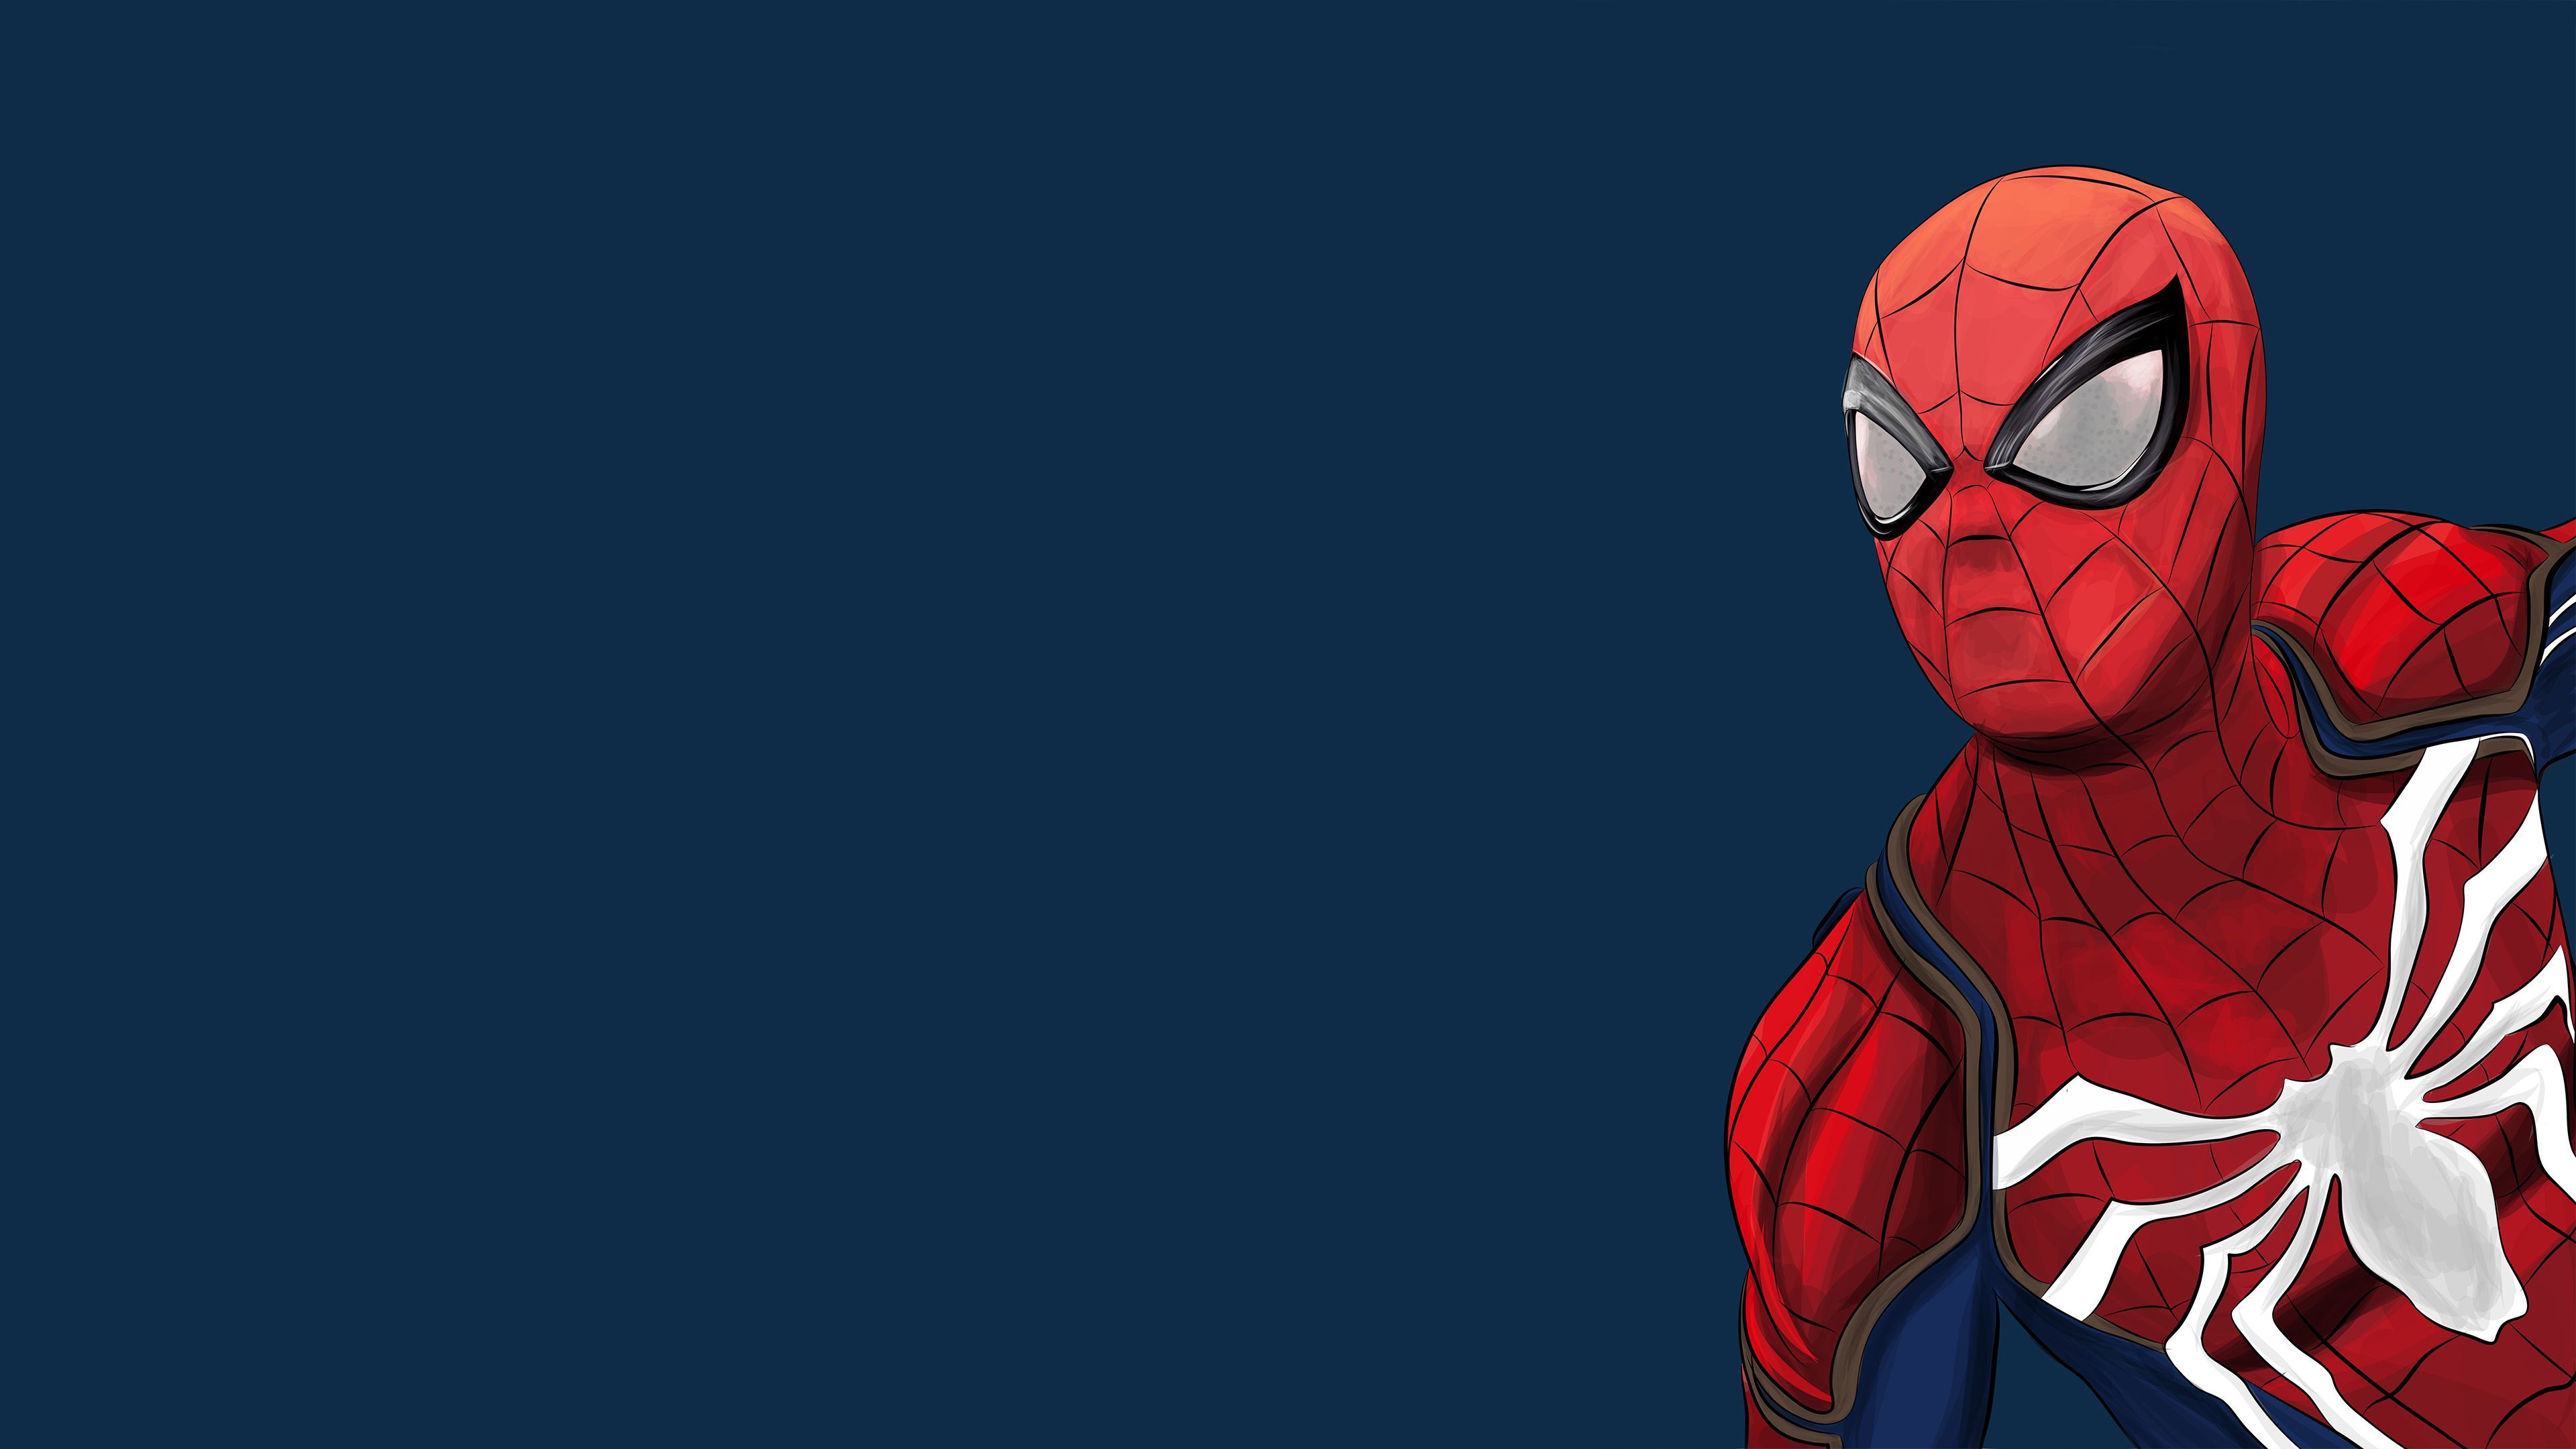 Spiderman Ps4 Artwork 4k 2018 superhéroes fondos de pantalla, spiderman